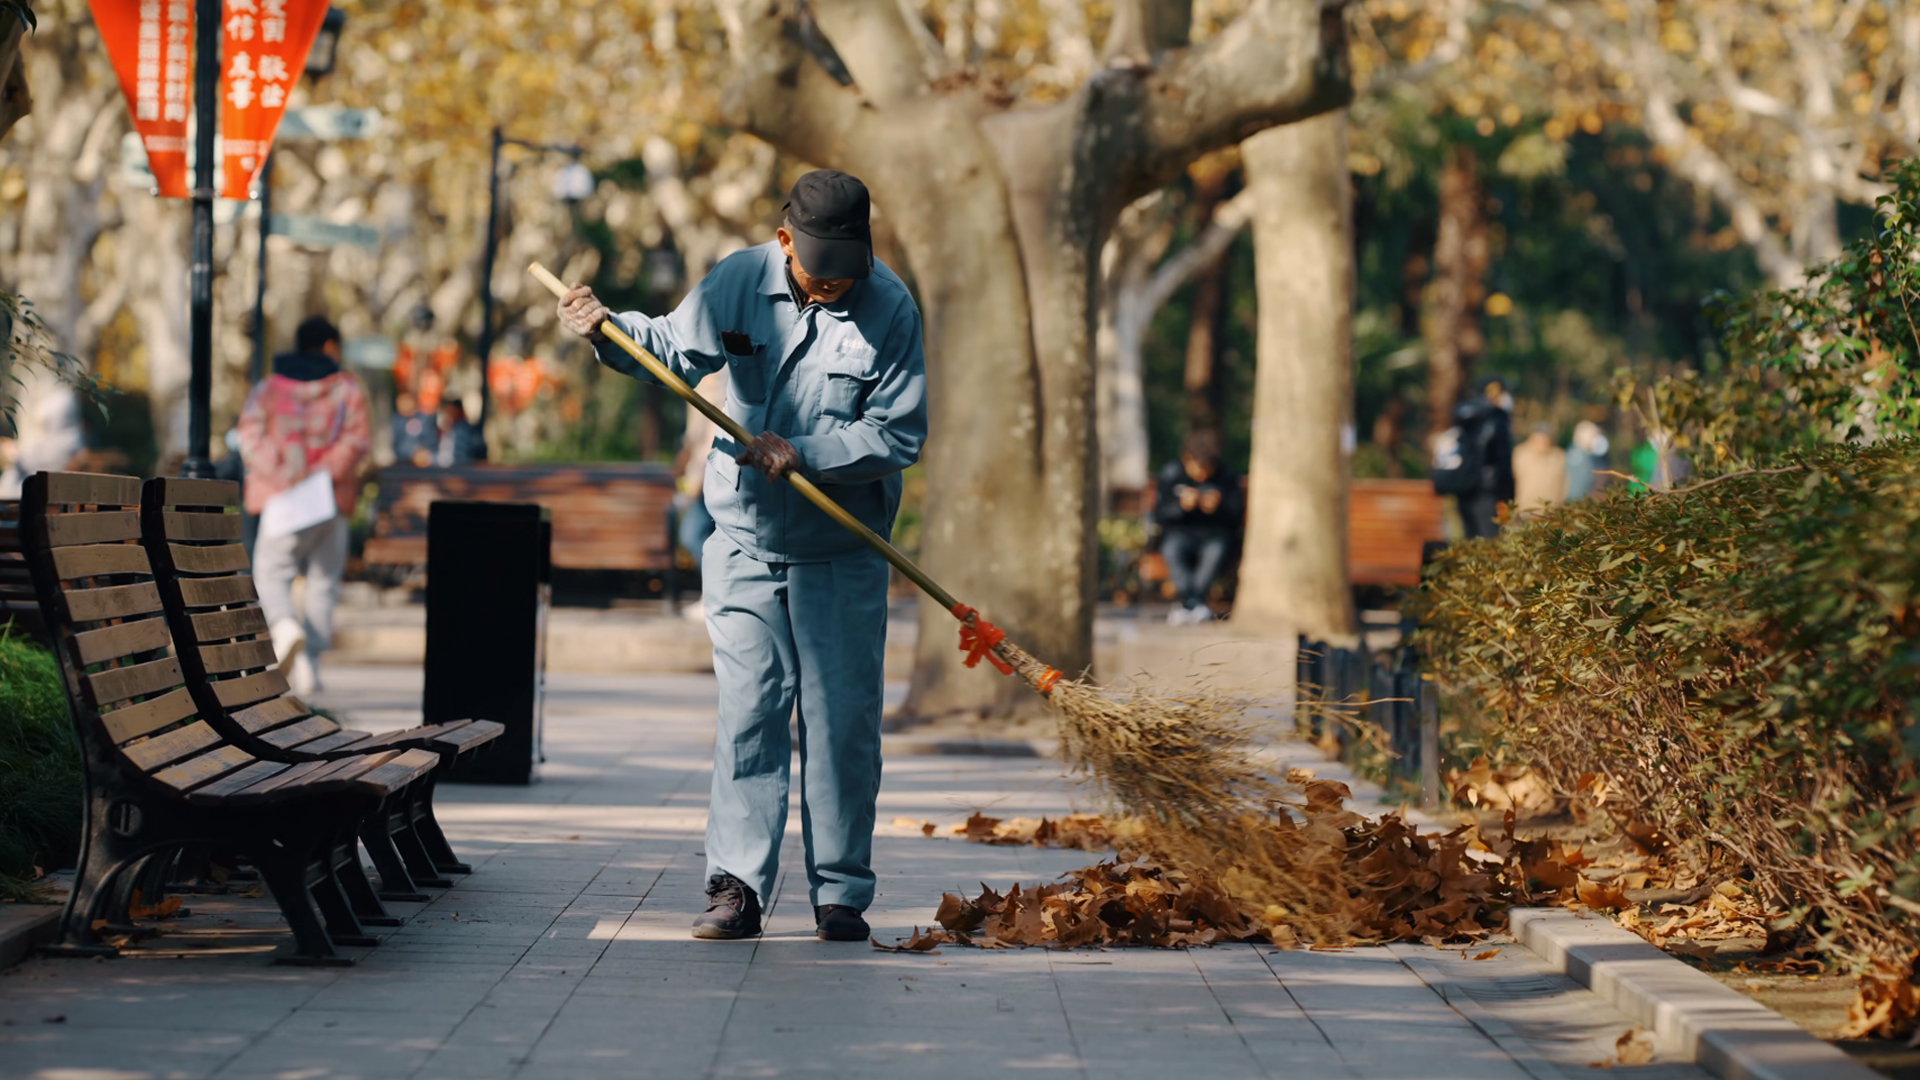 People Street ChongQing Men Broom Cleaning Fallen Leaves Bench Trees Men Outdoors 1920x1080